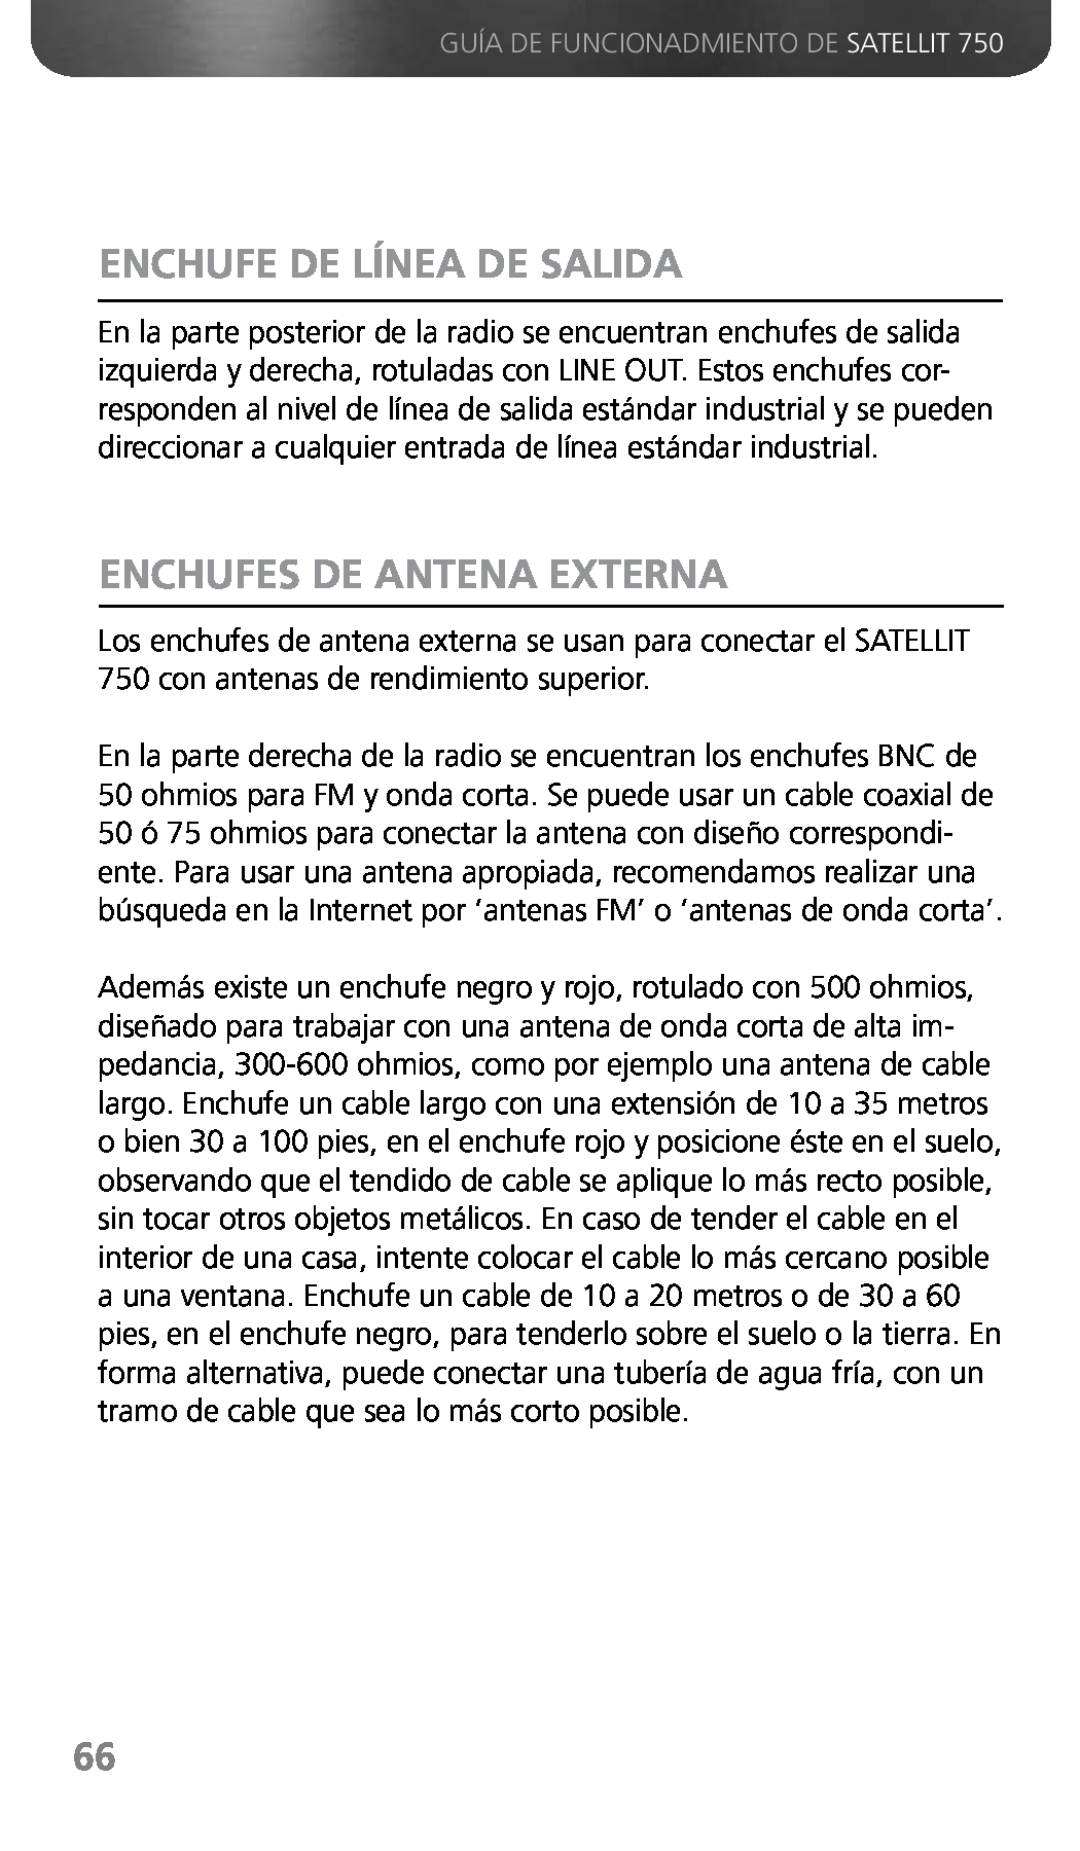 Grundig 750 owner manual Enchufe De Línea De Salida, Enchufes De Antena Externa 